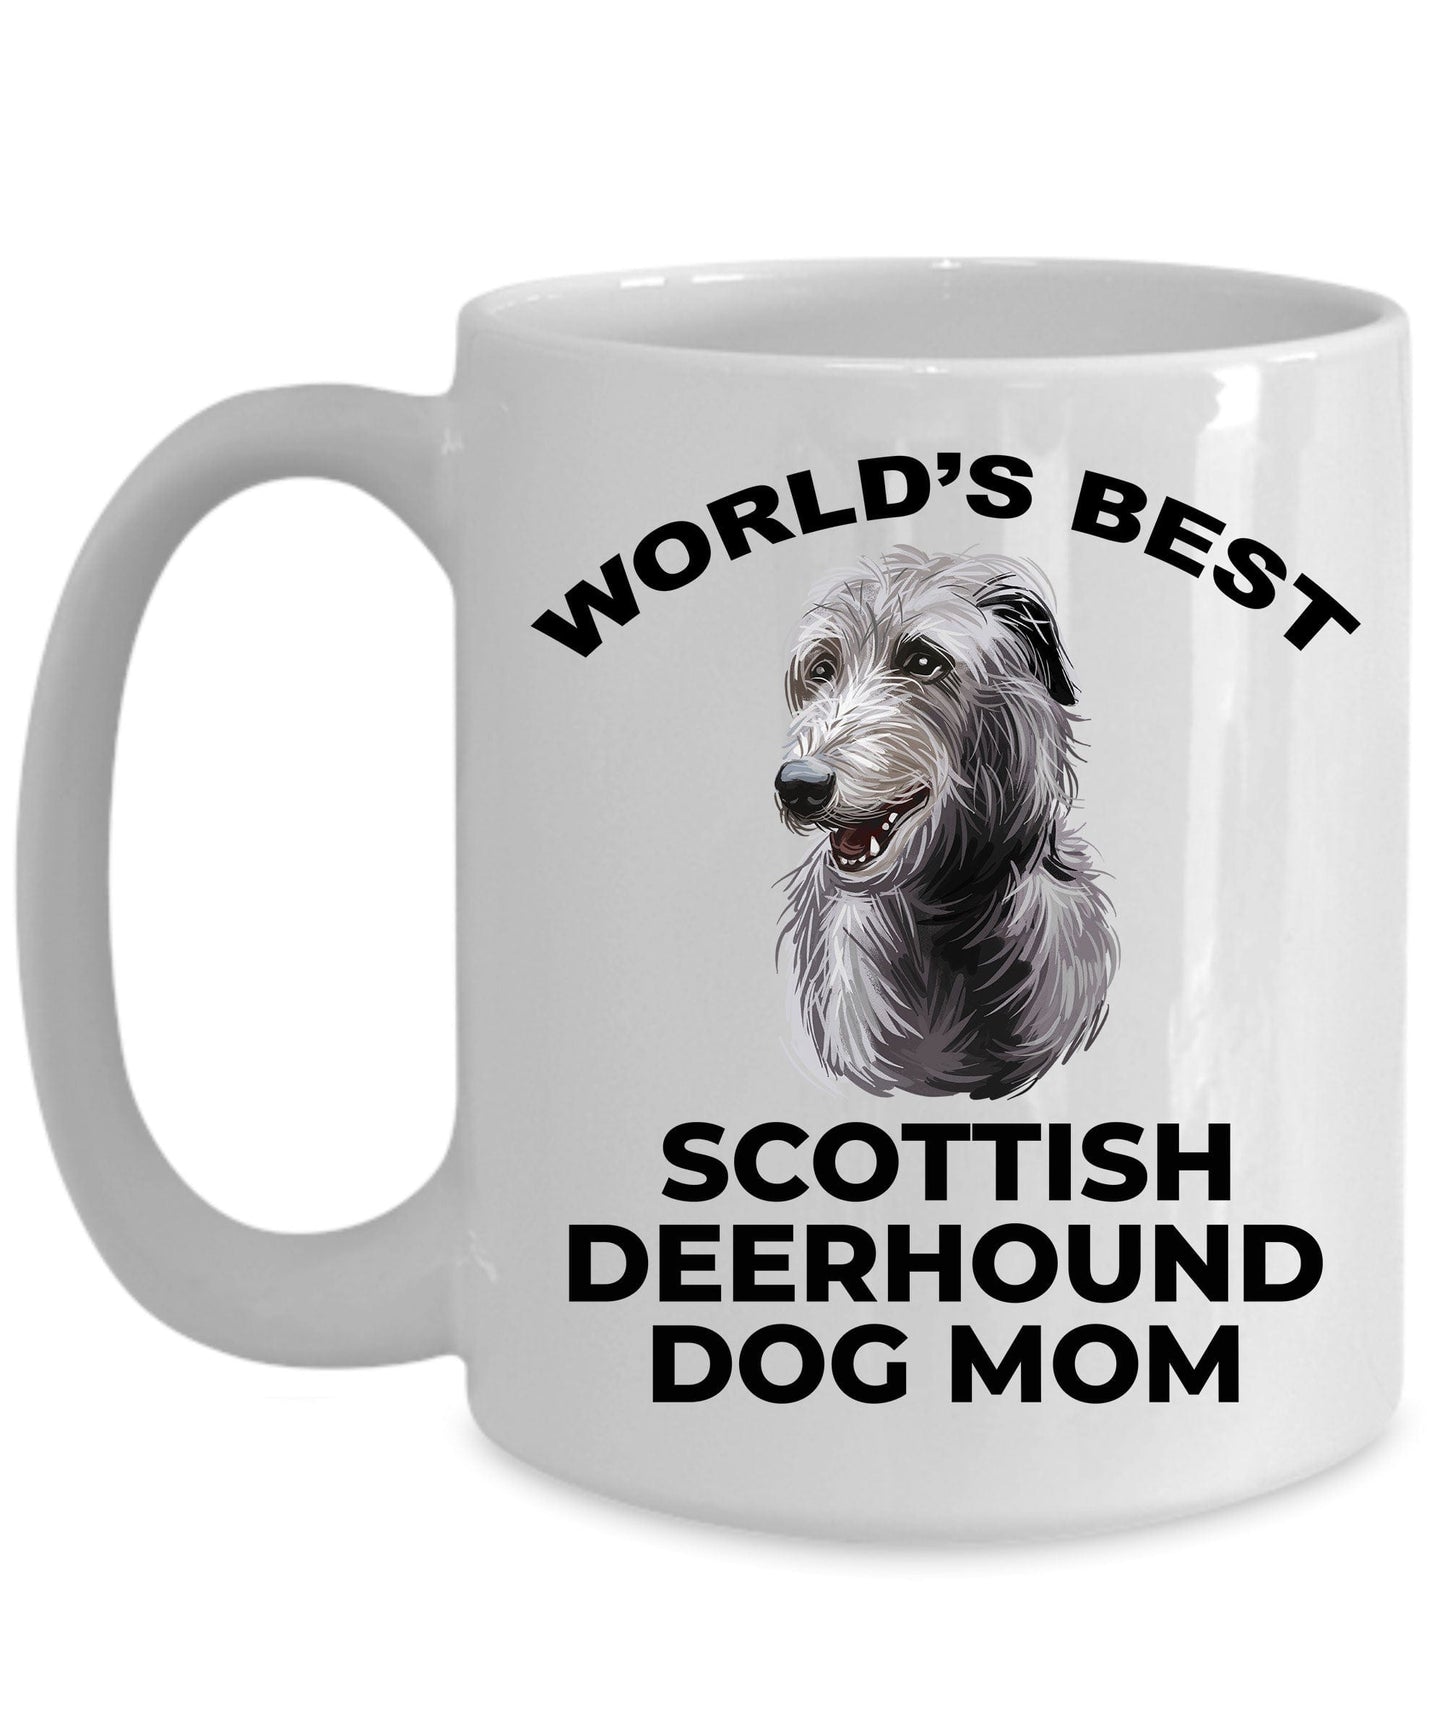 Scottish Deerhound Best Dog Mom ceramic coffee mug